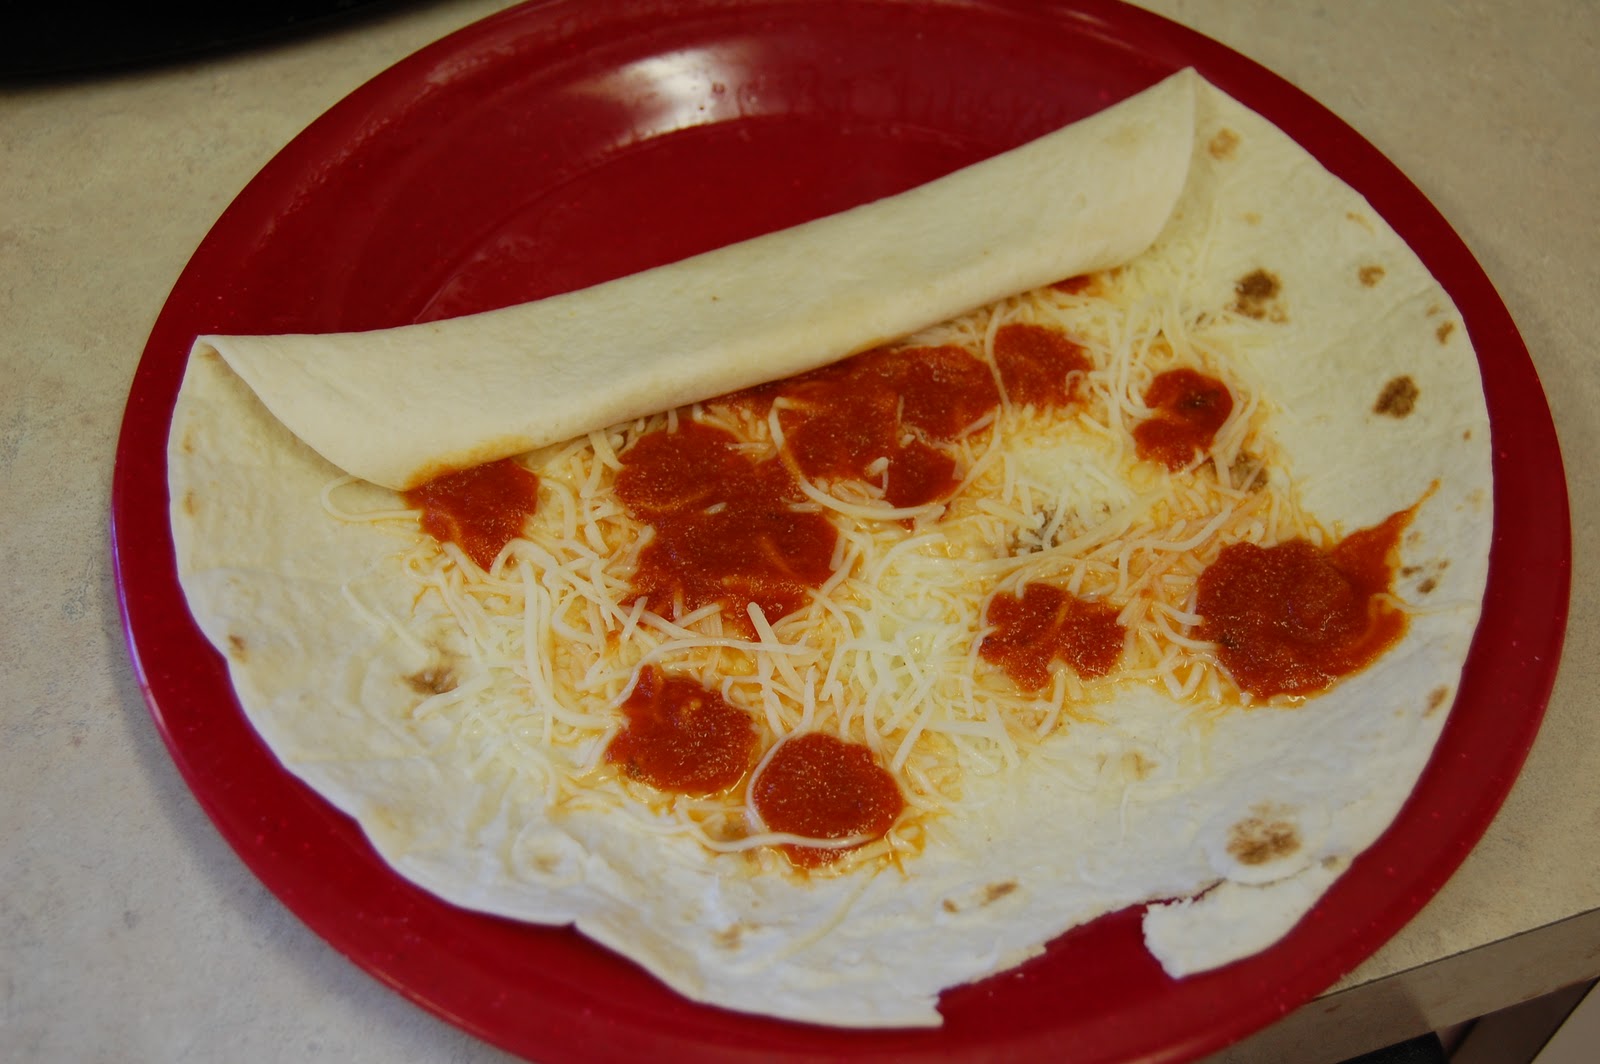 kristy.makes: recipe: after school snack pizza burrito